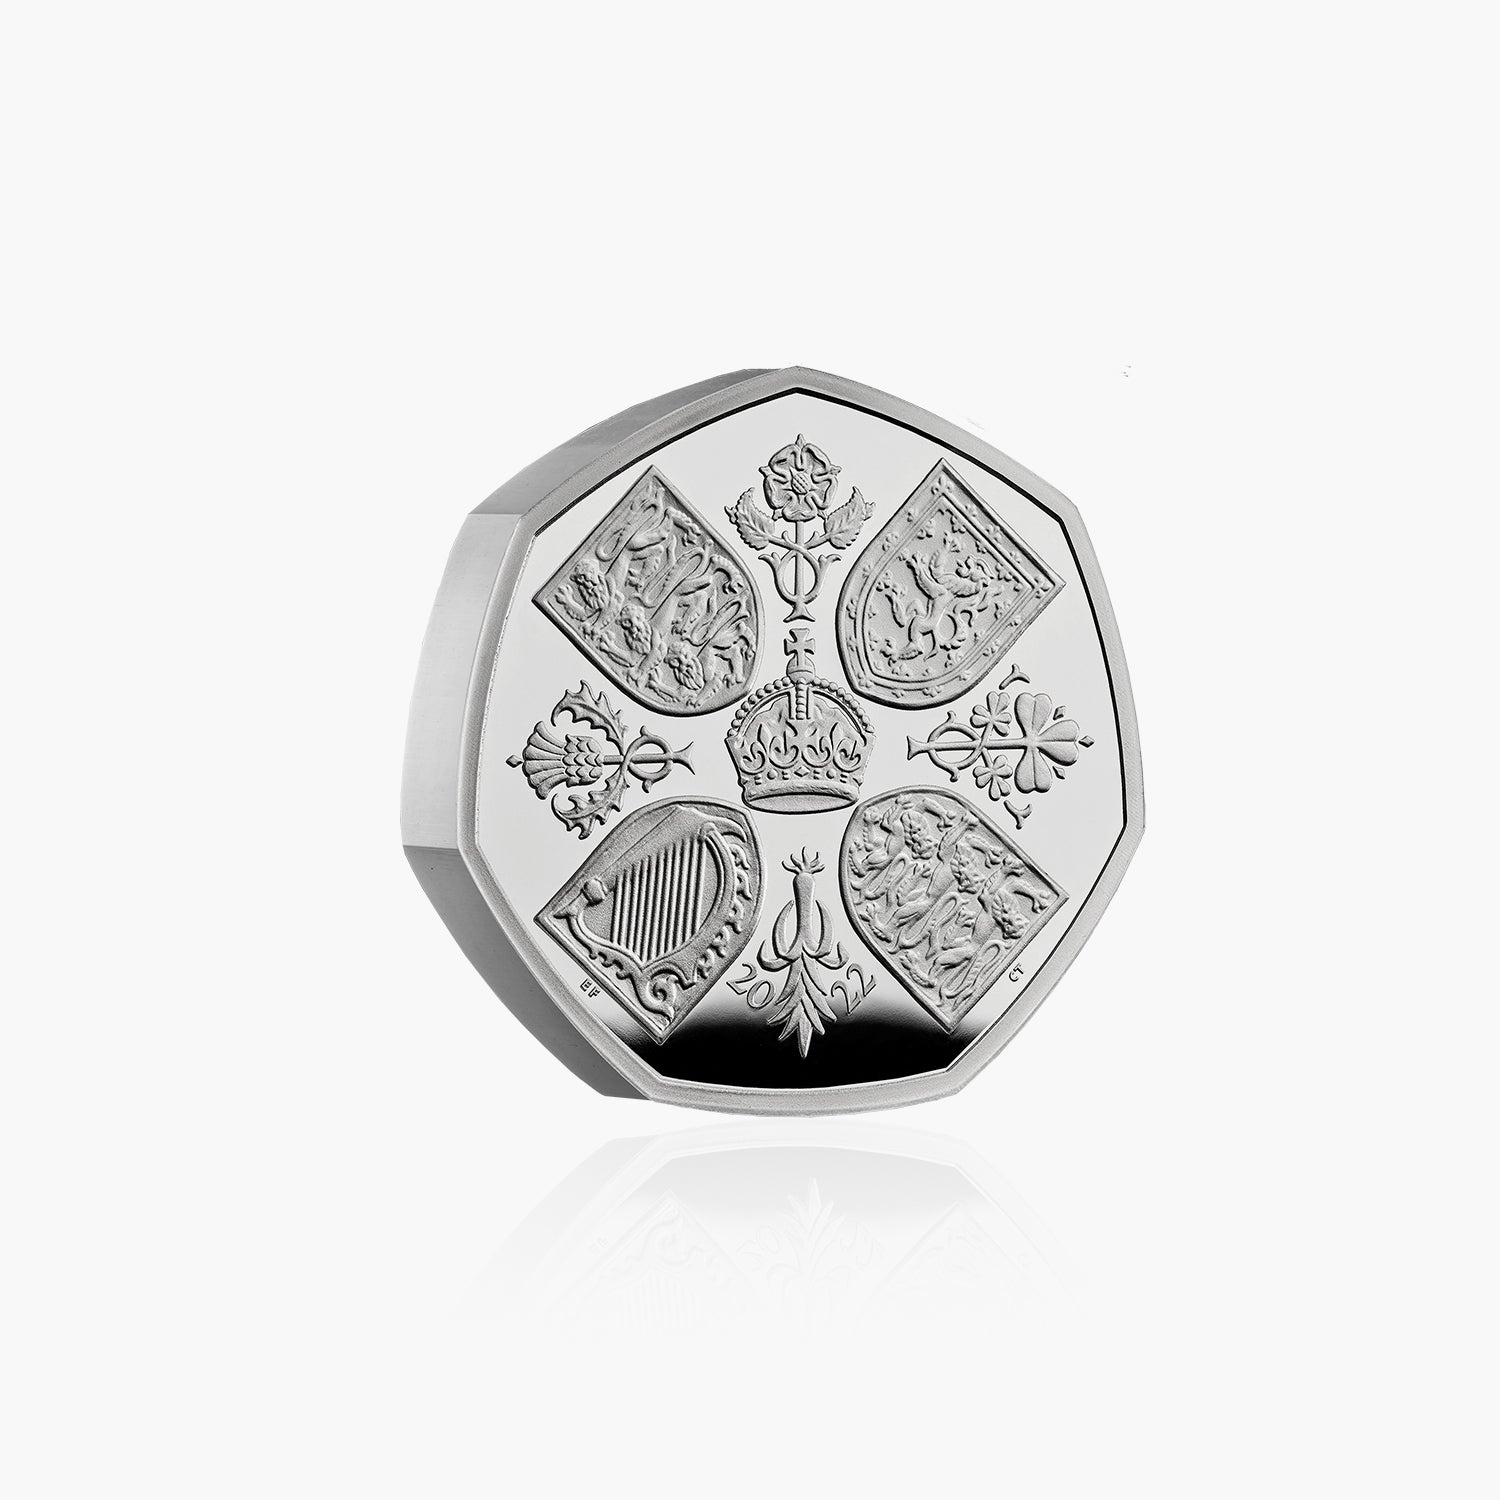 Her Majesty Queen Elizabeth II 2022 50p Silver Piedfort Coin - King Charles III first portrait